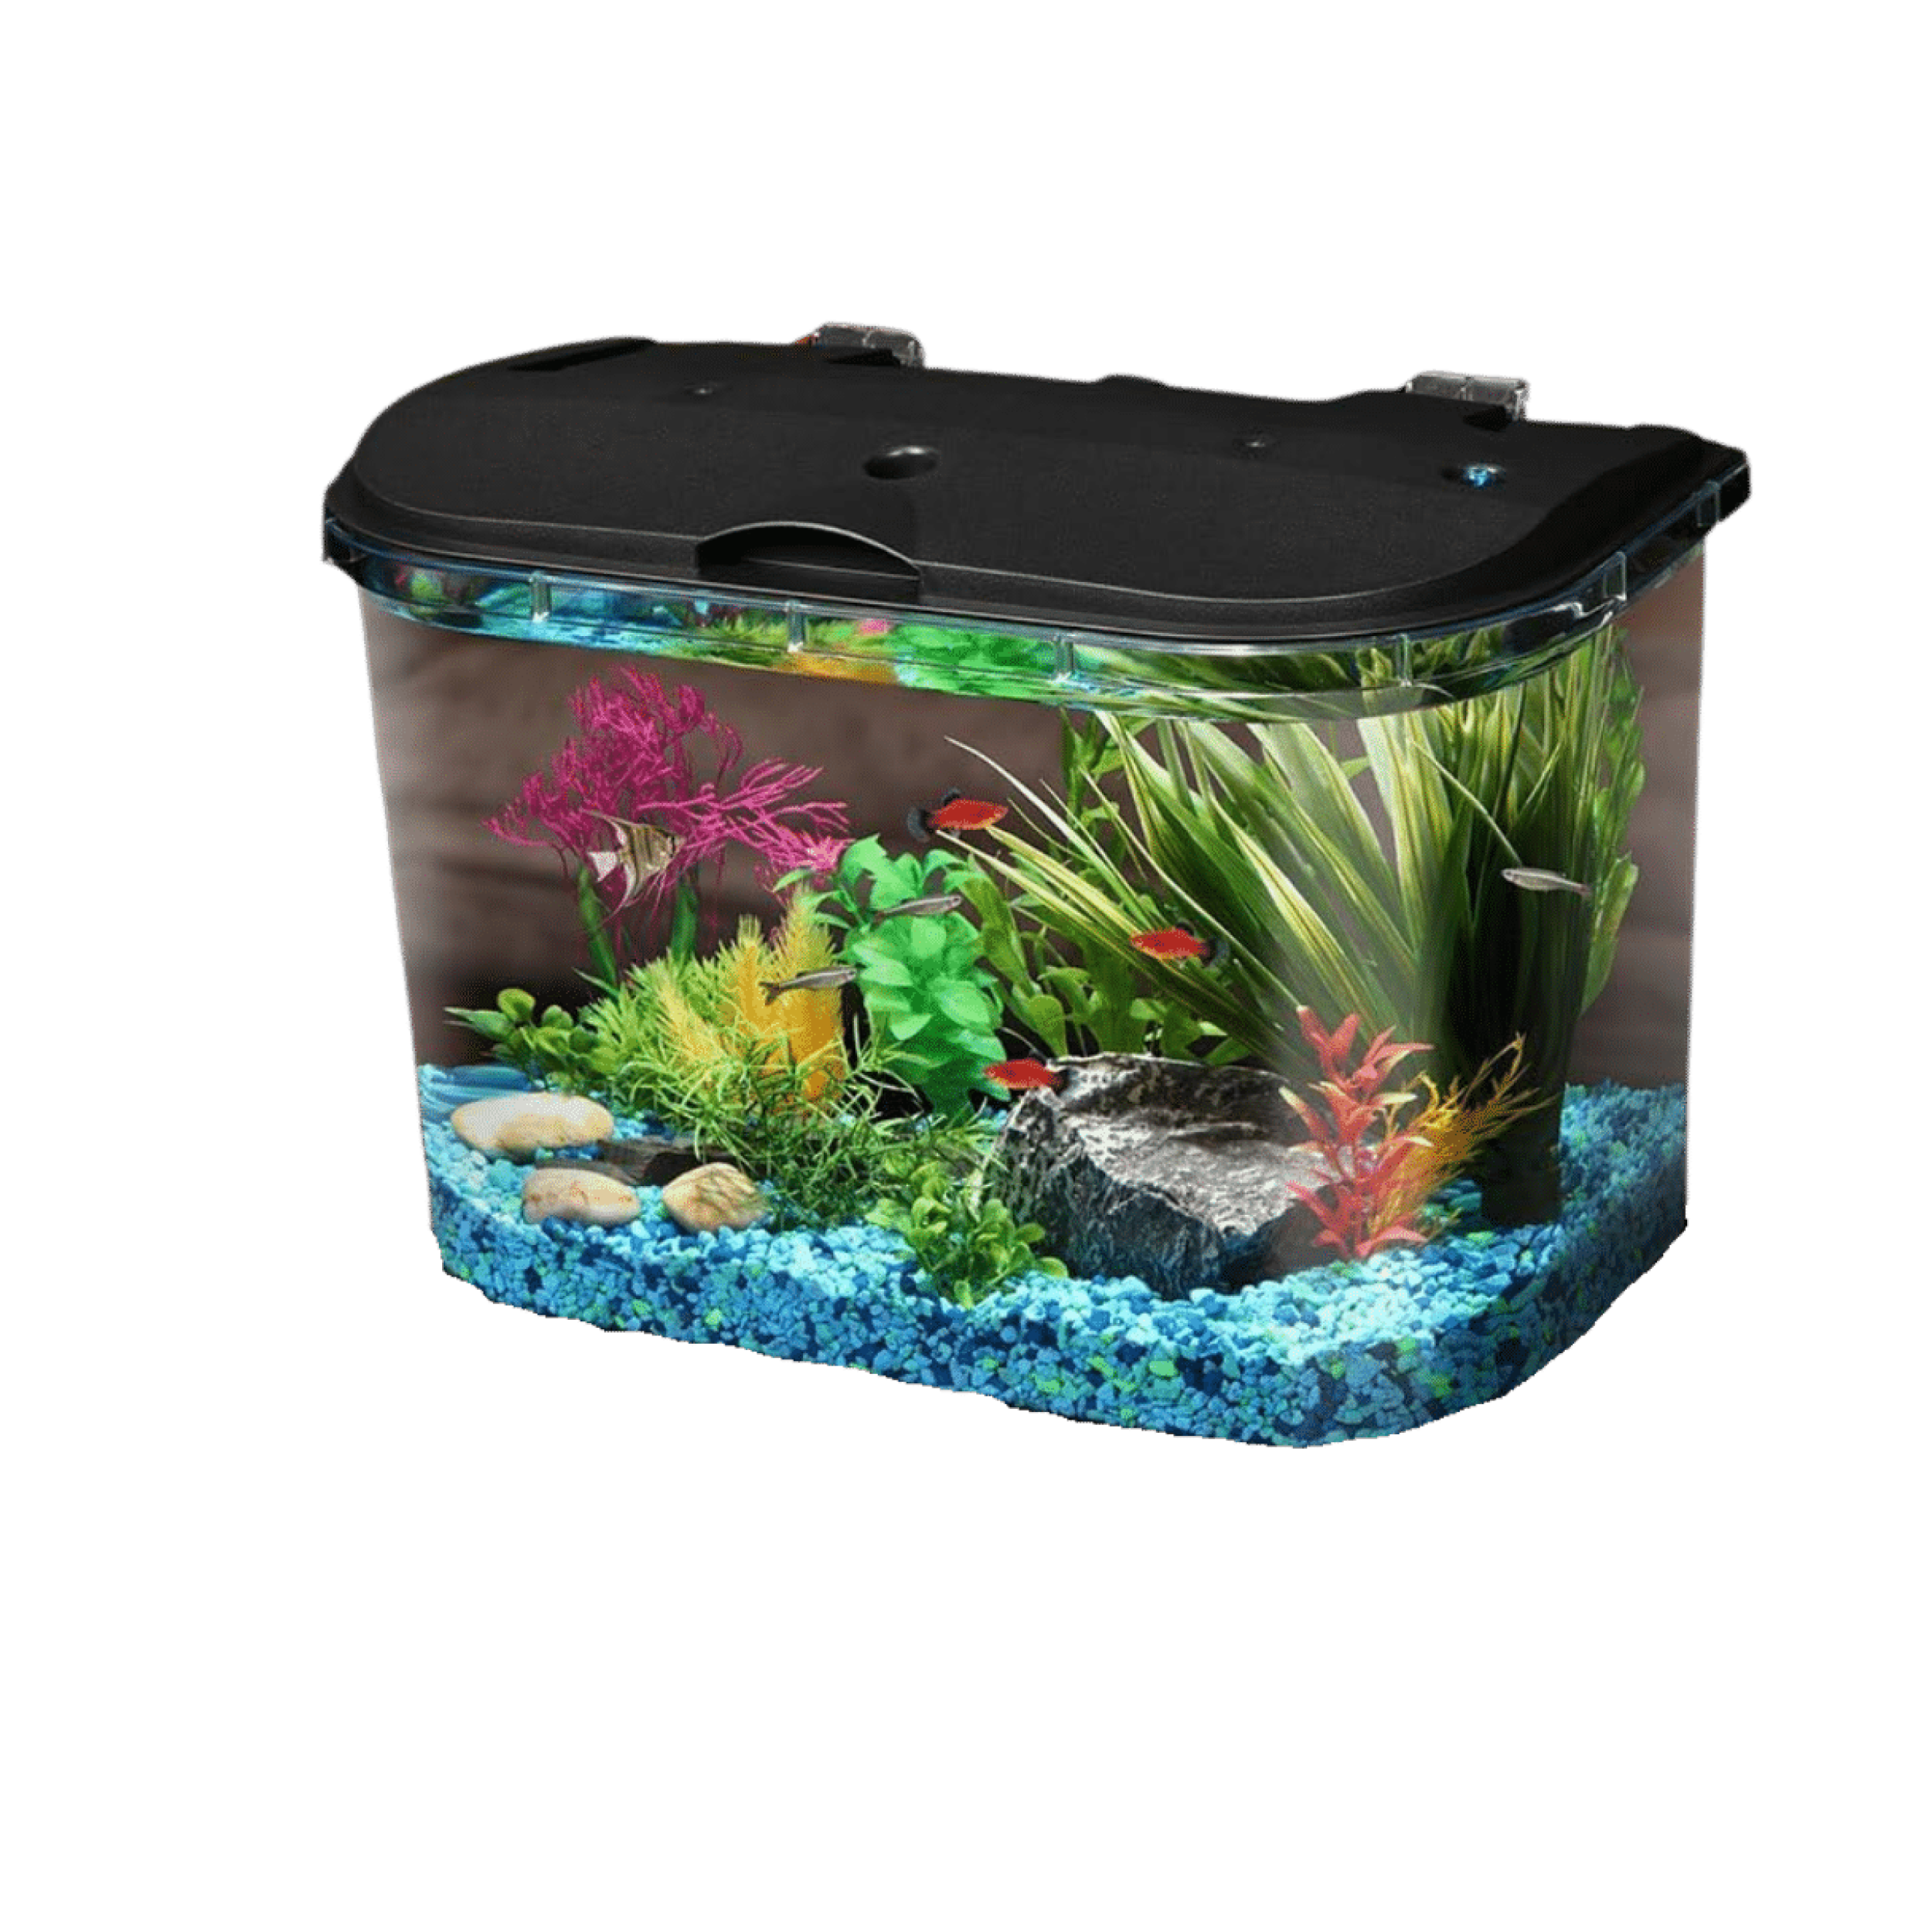 Koller 5 gallon fish tank